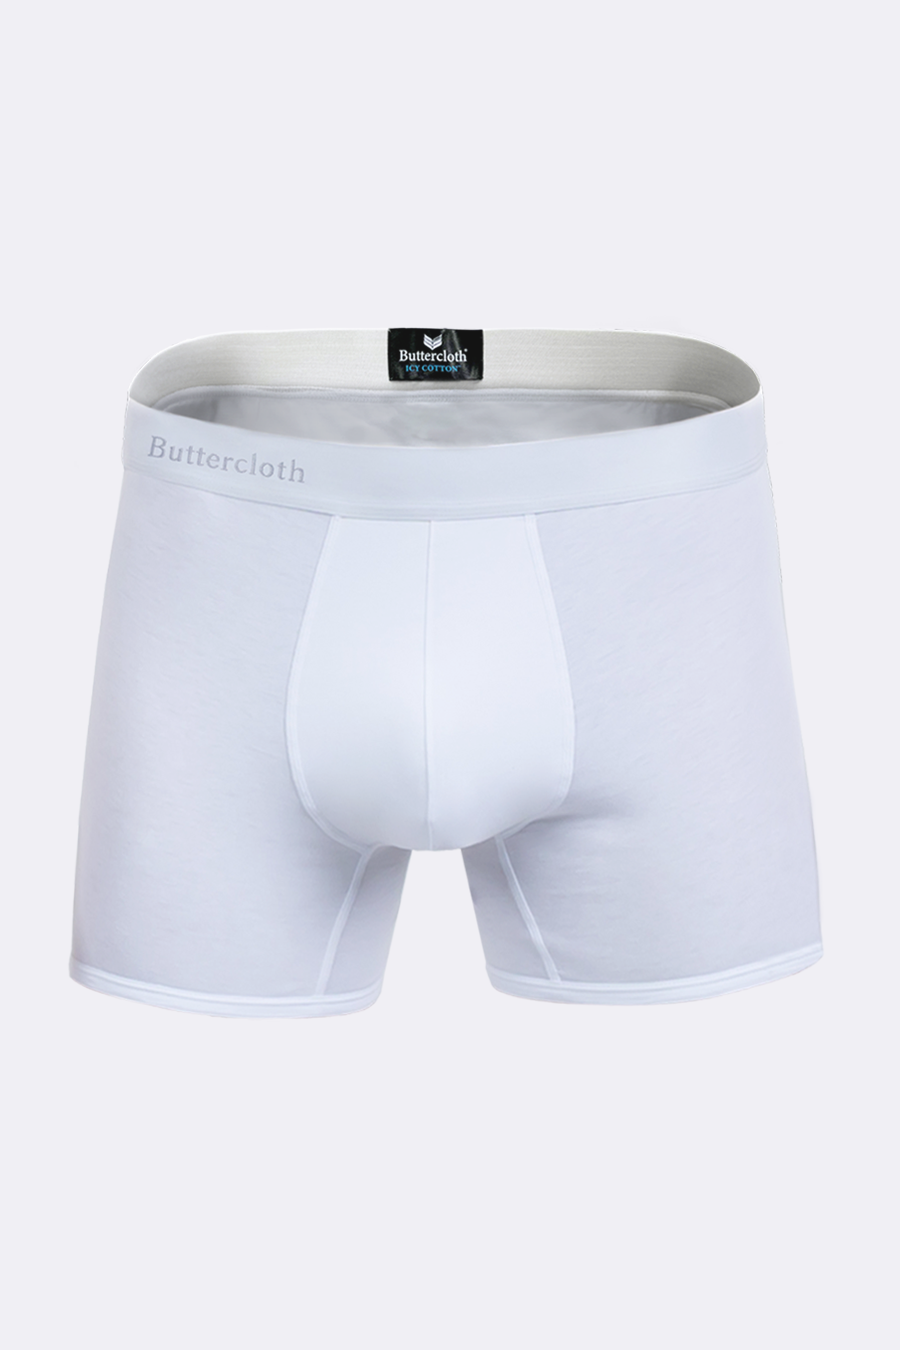 VIP Frenchie Men's Cotton Brief White Undergarment Stylish & extra  comfortable